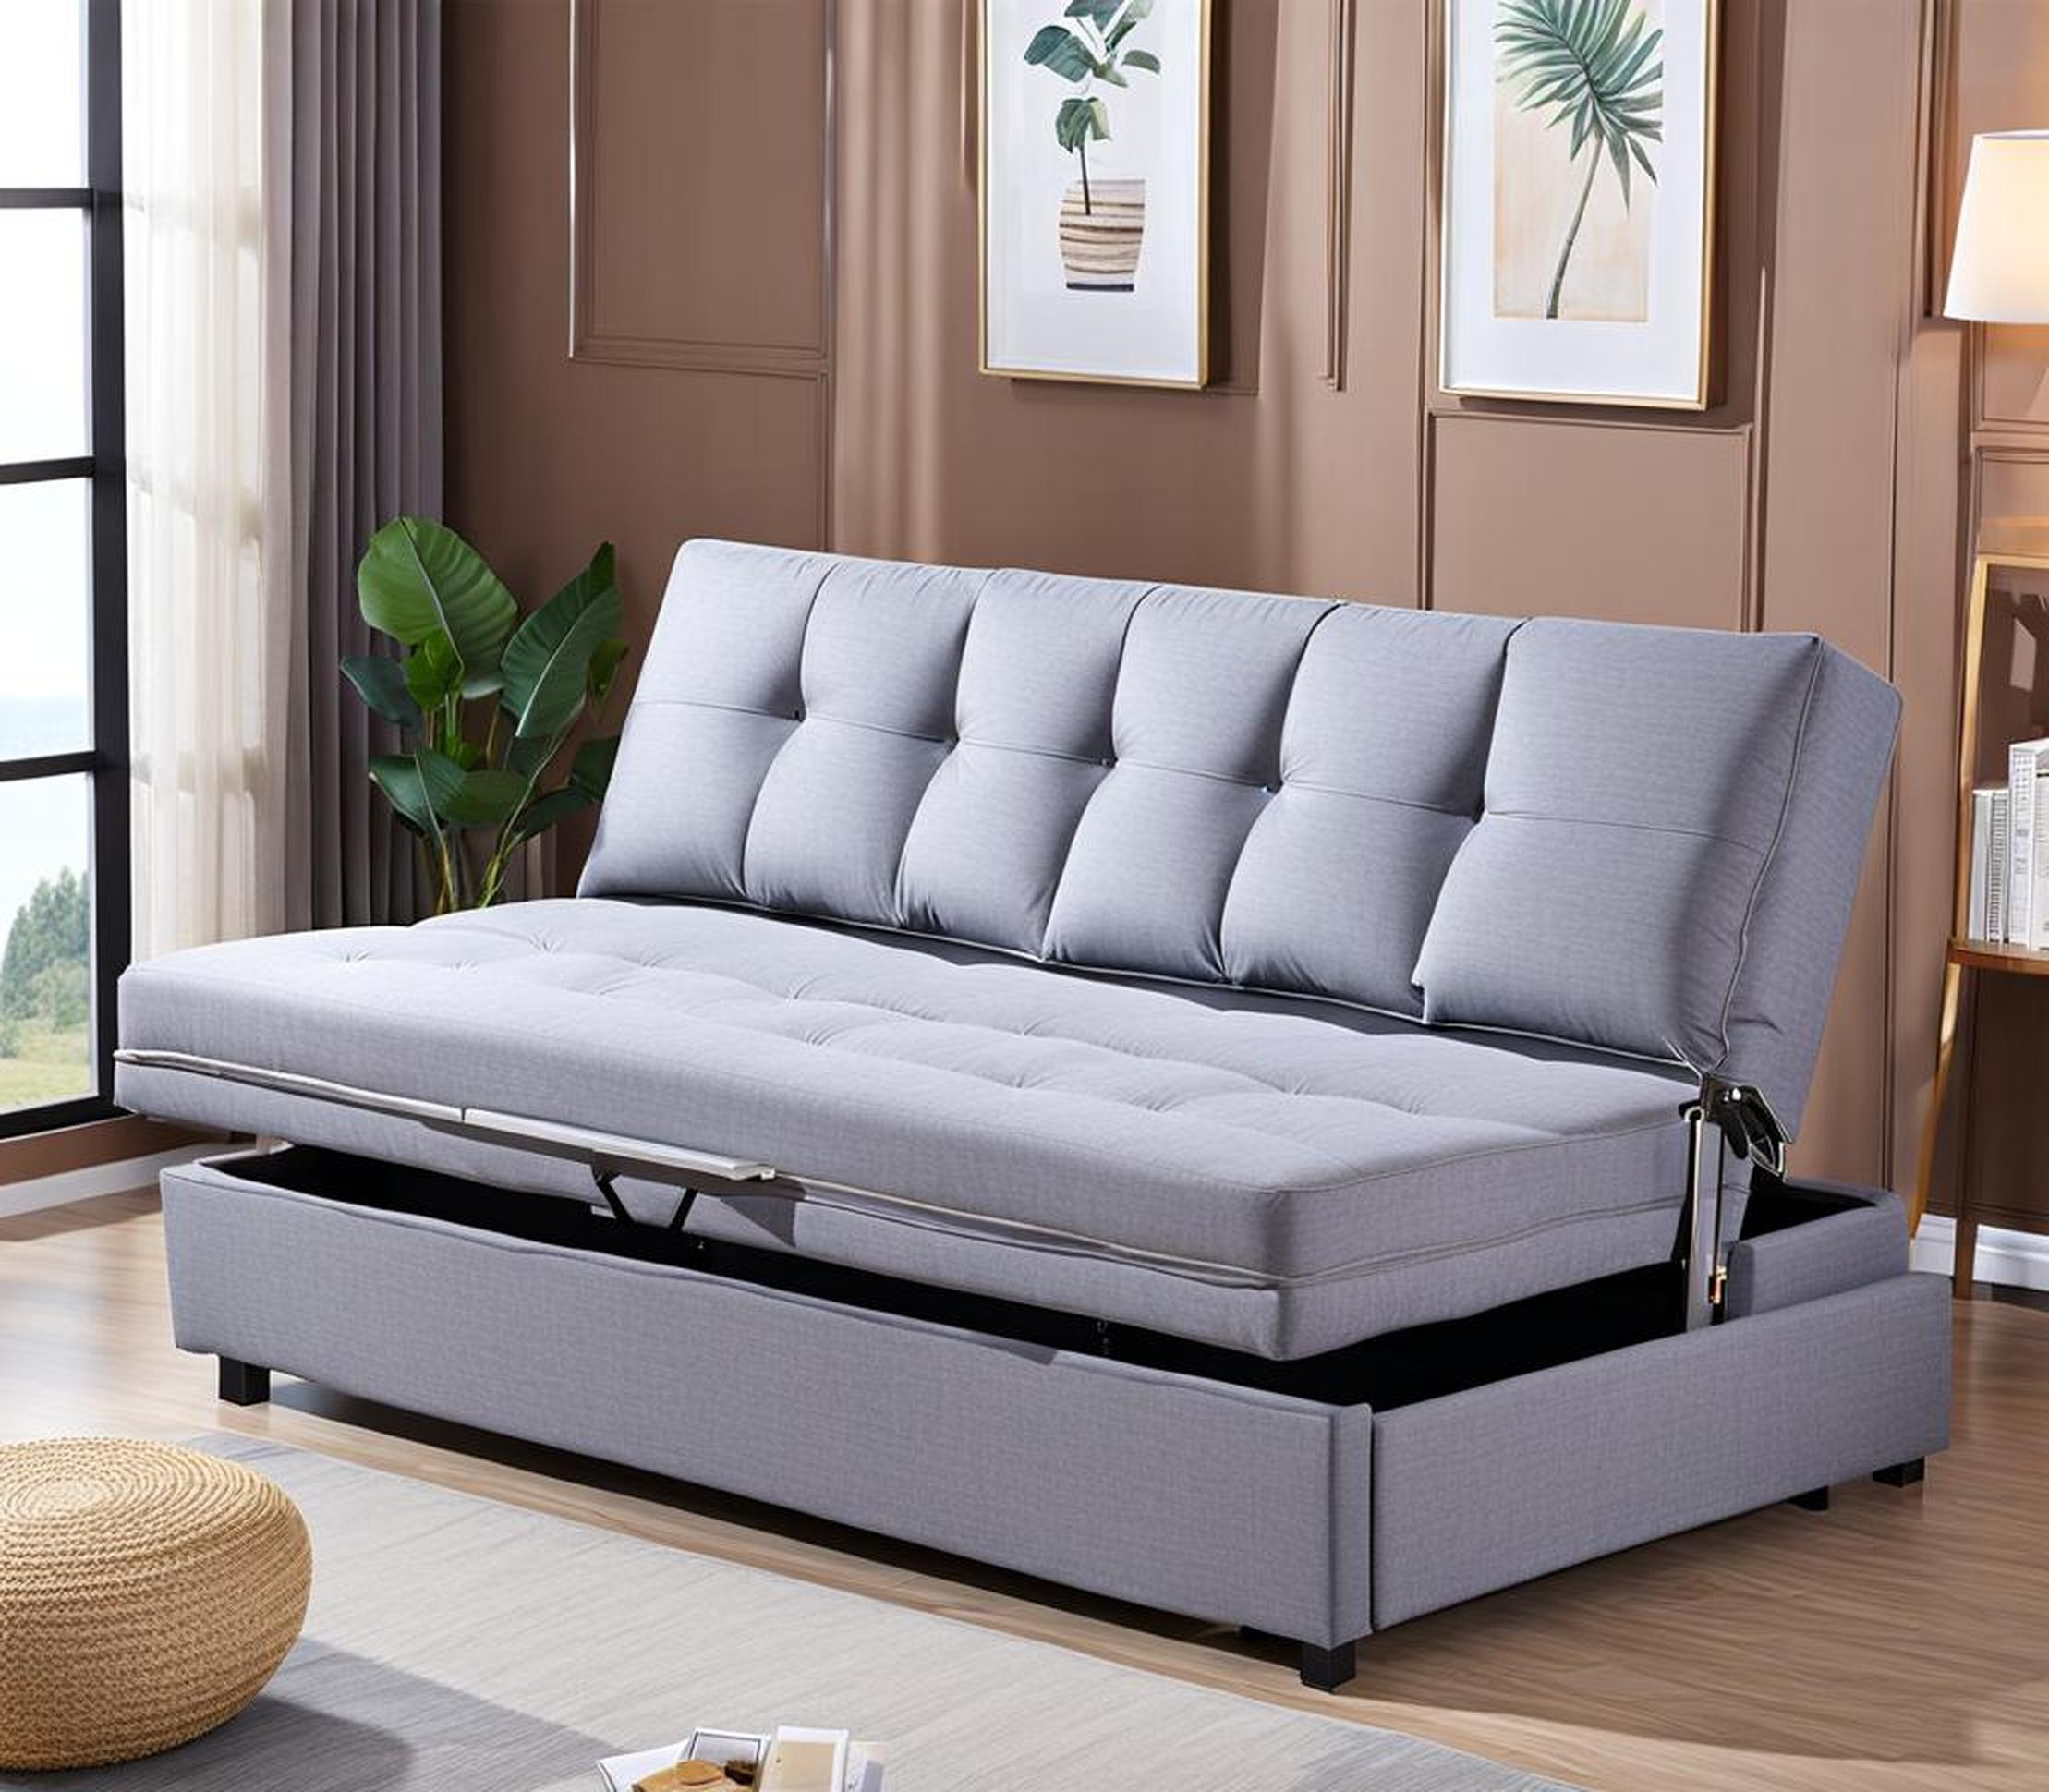 space-saving multi-purpose living room furniture modern fabric folding sofa bed